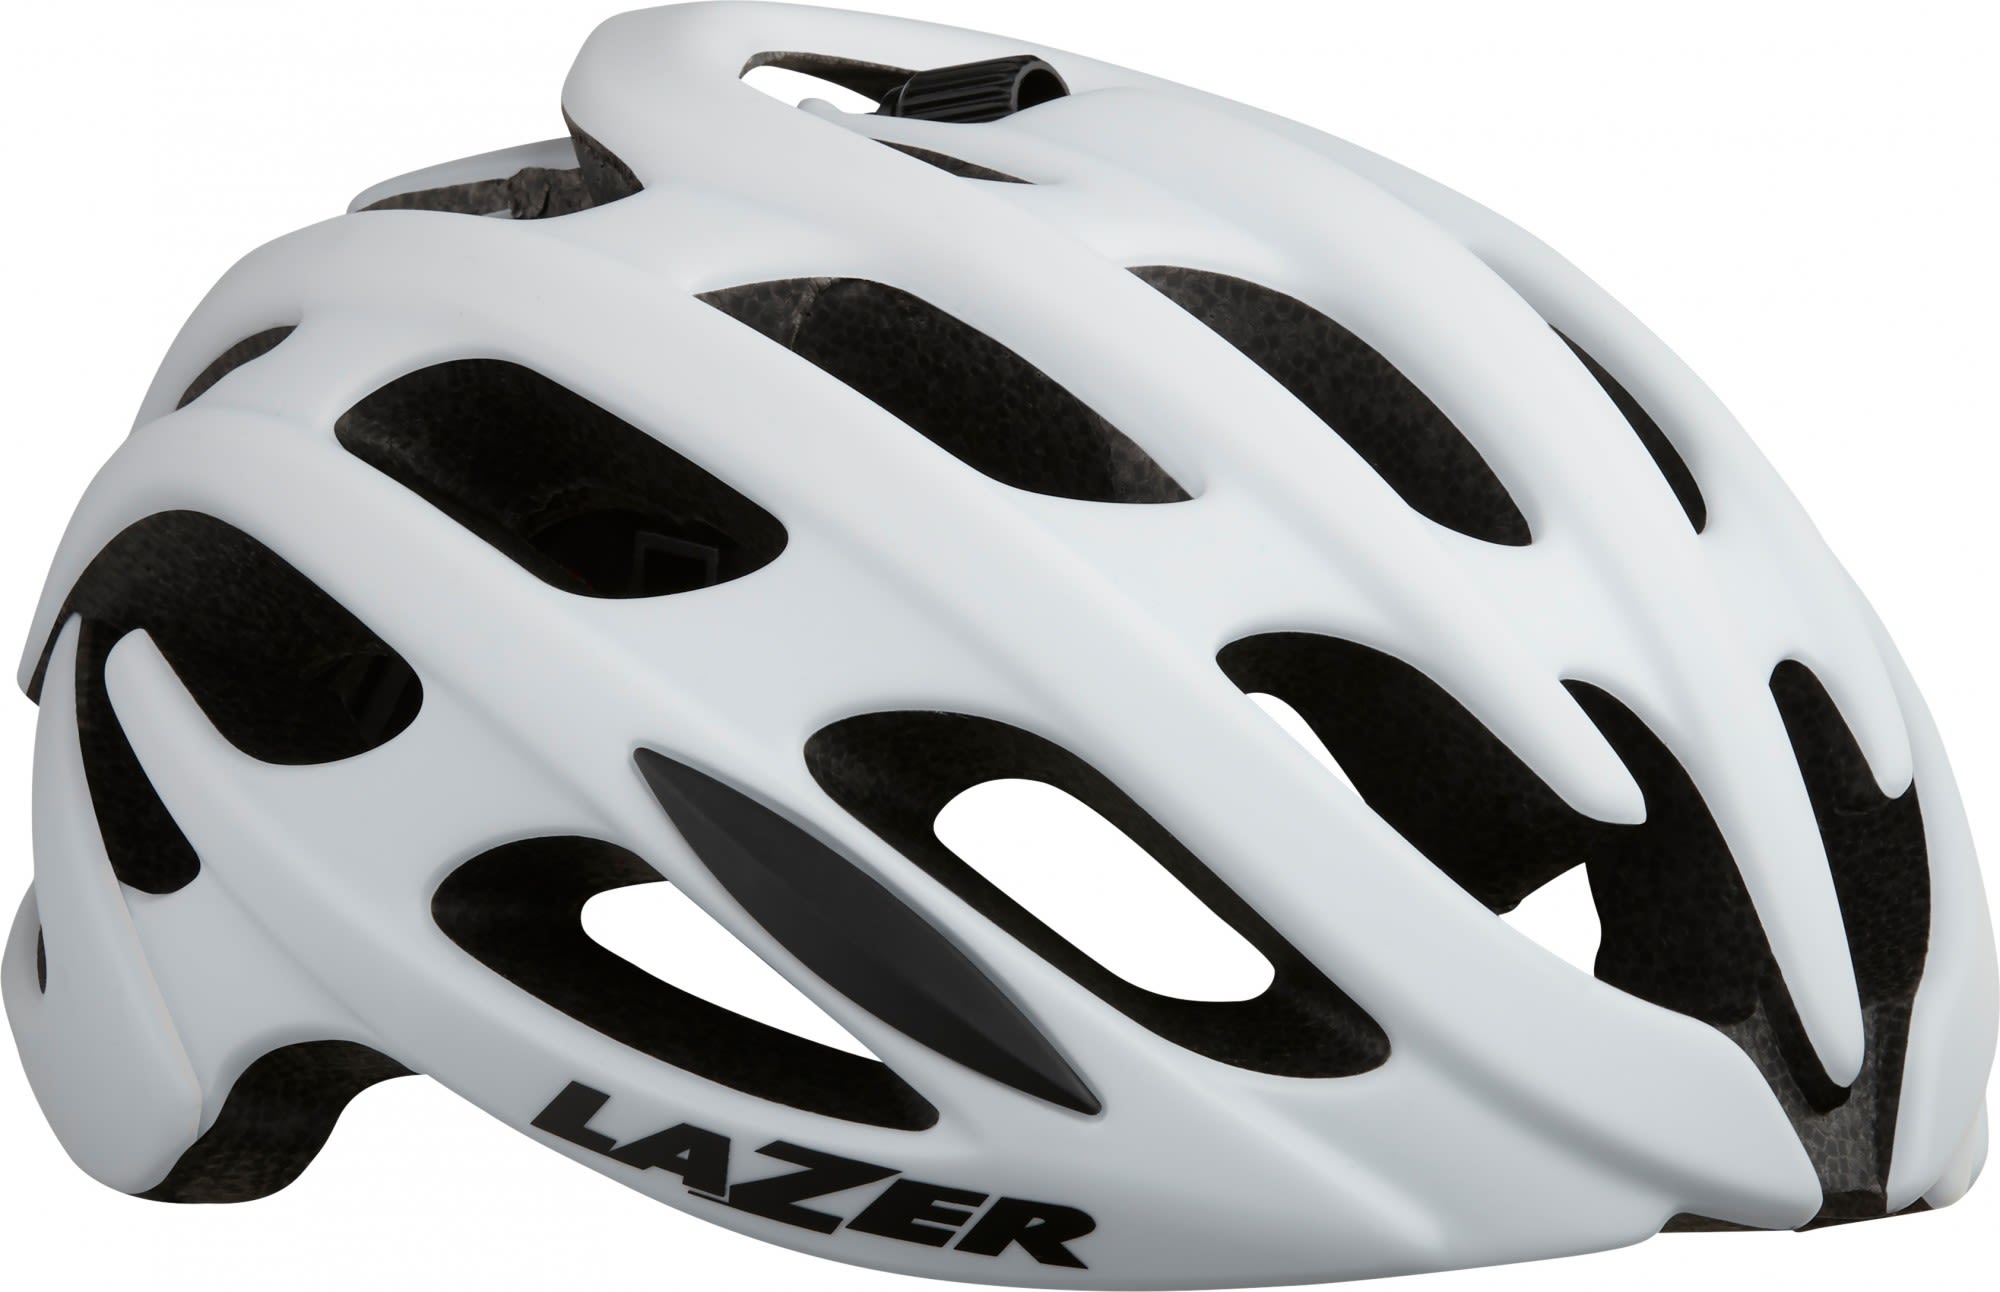 Lazer Blade+ Weiss- Fahrradhelme- Grsse S - Farbe White